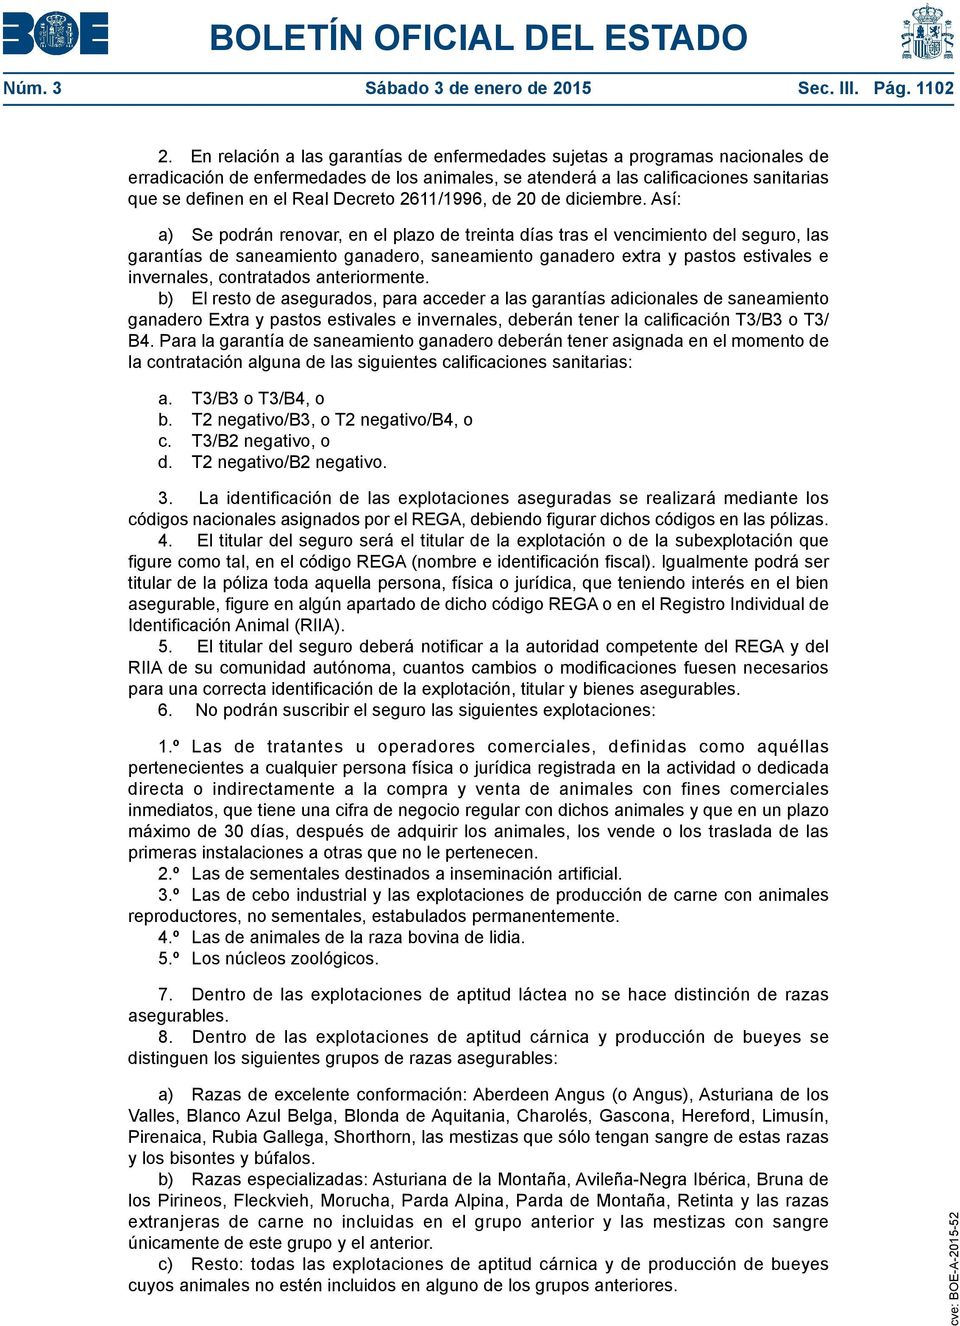 Decreto 2611/1996, de 20 de diciembre.